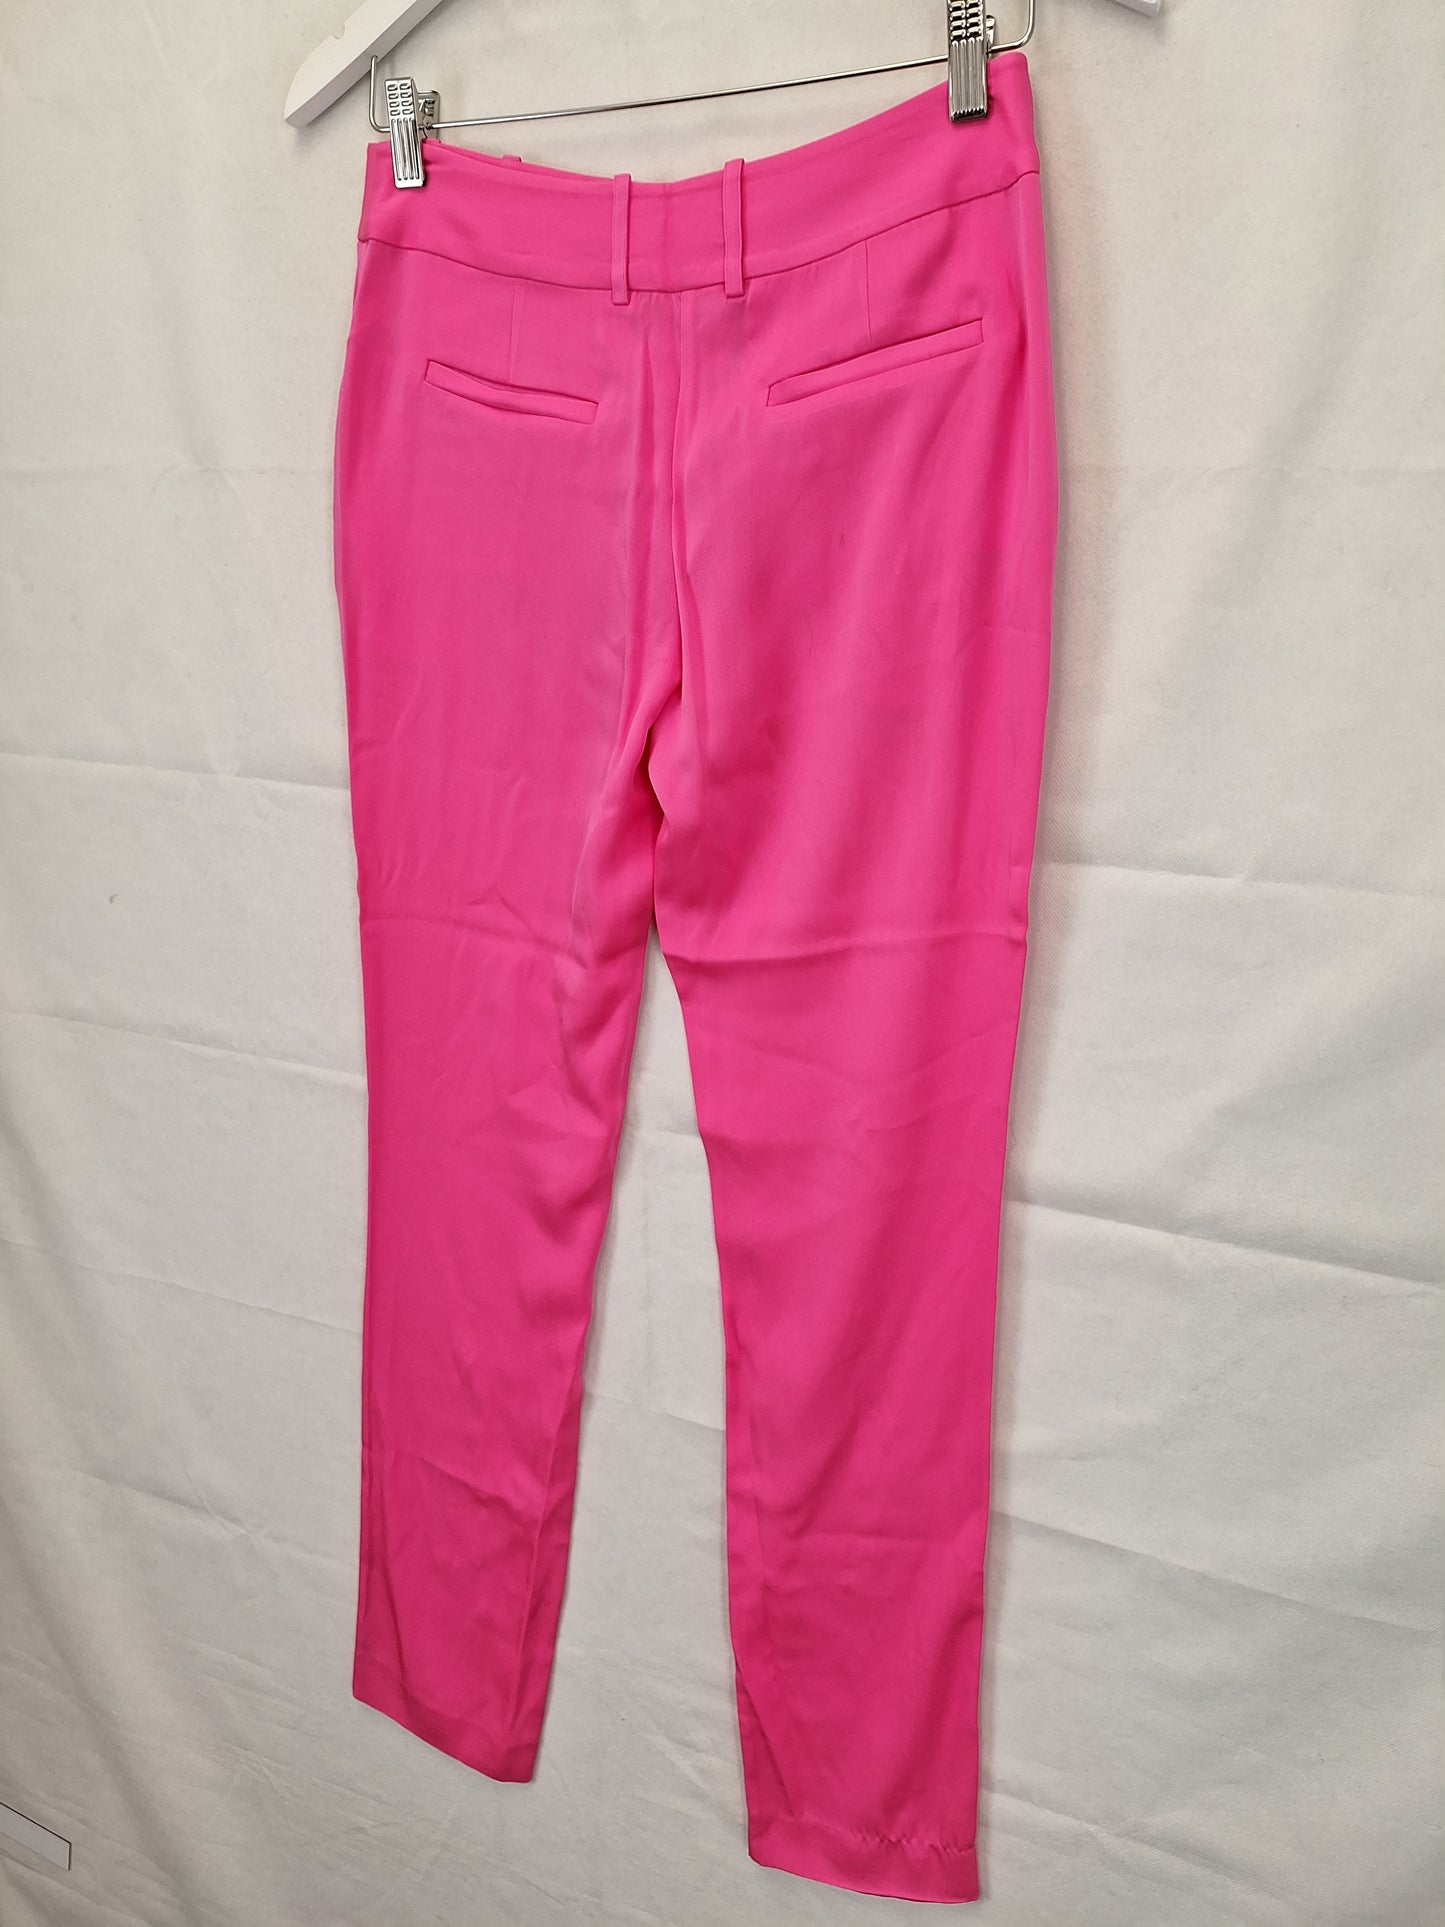 Sass & Bide Fluo Pink Pop Silk Blend Pants Size 6 by SwapUp-Online Second Hand Store-Online Thrift Store